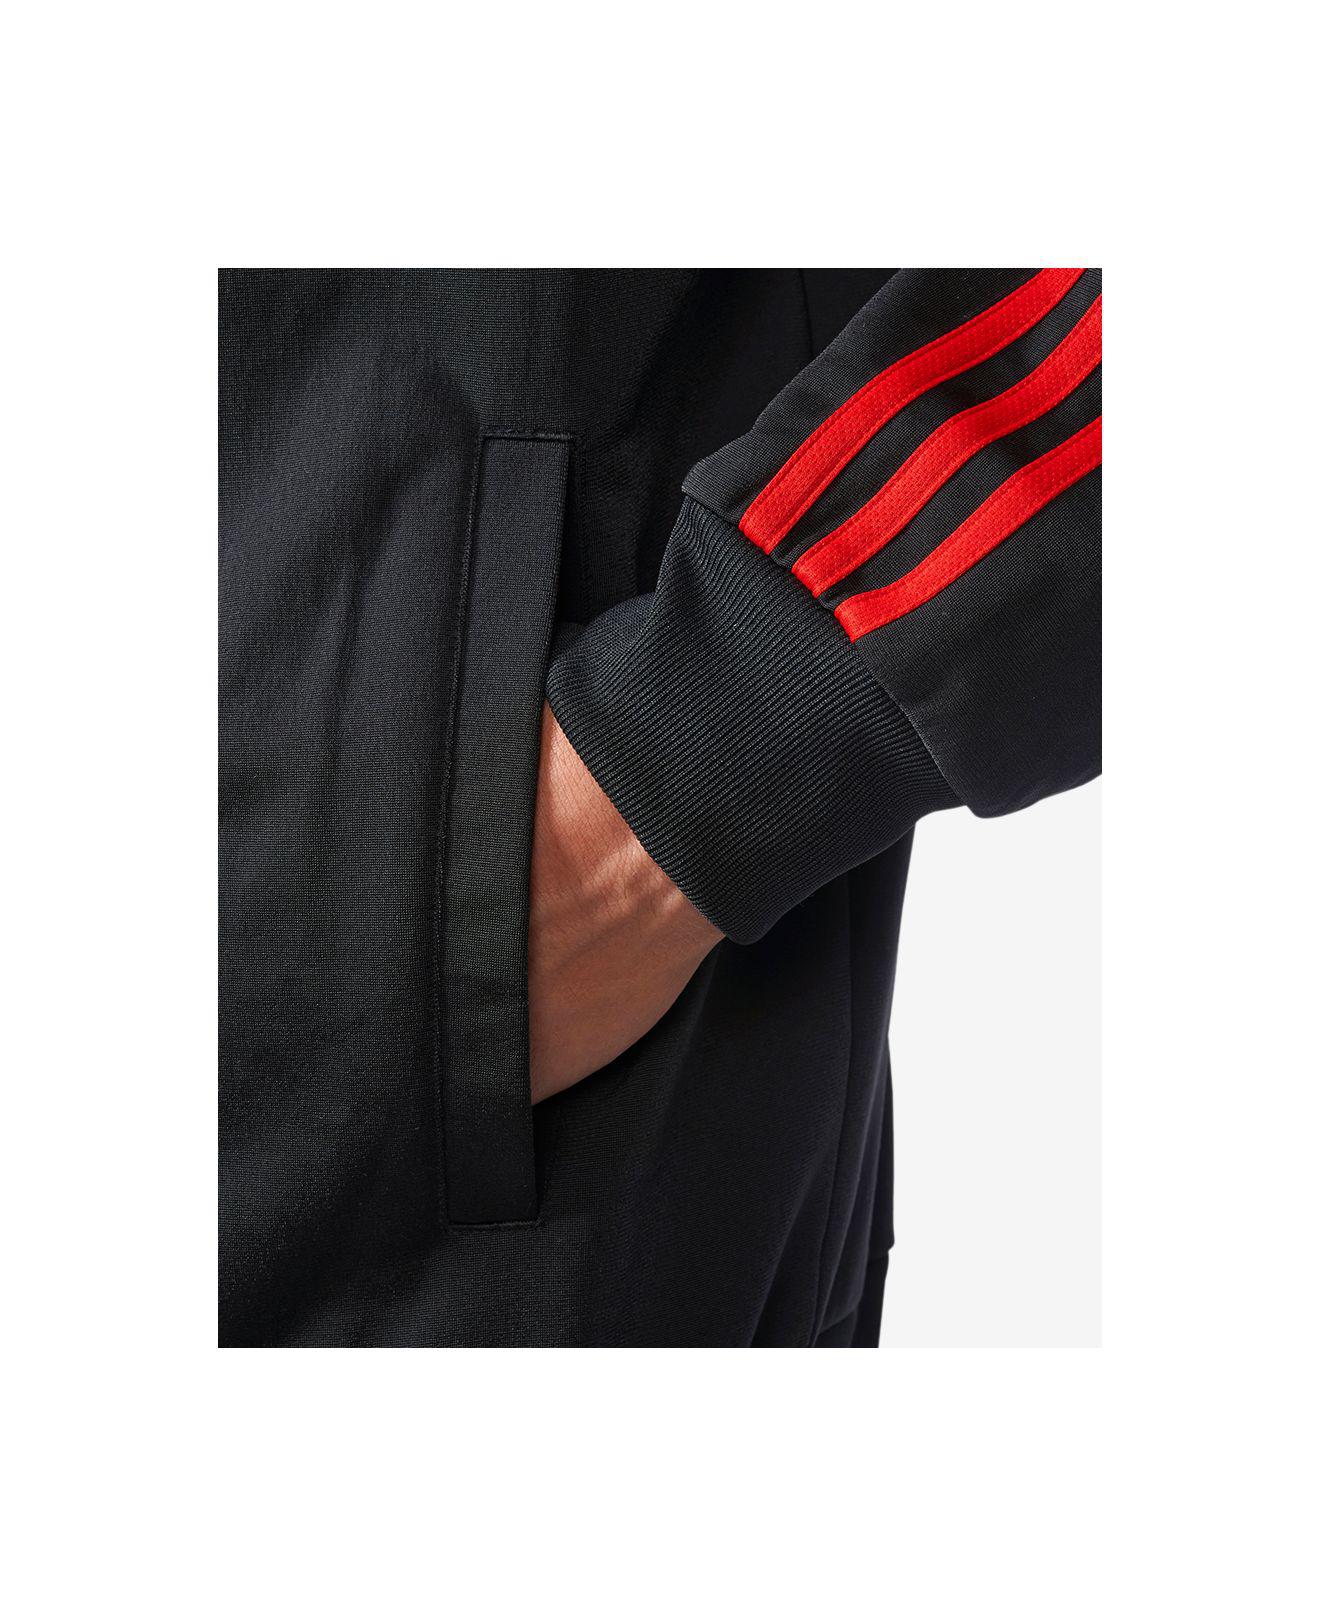 mens black and red adidas jacket